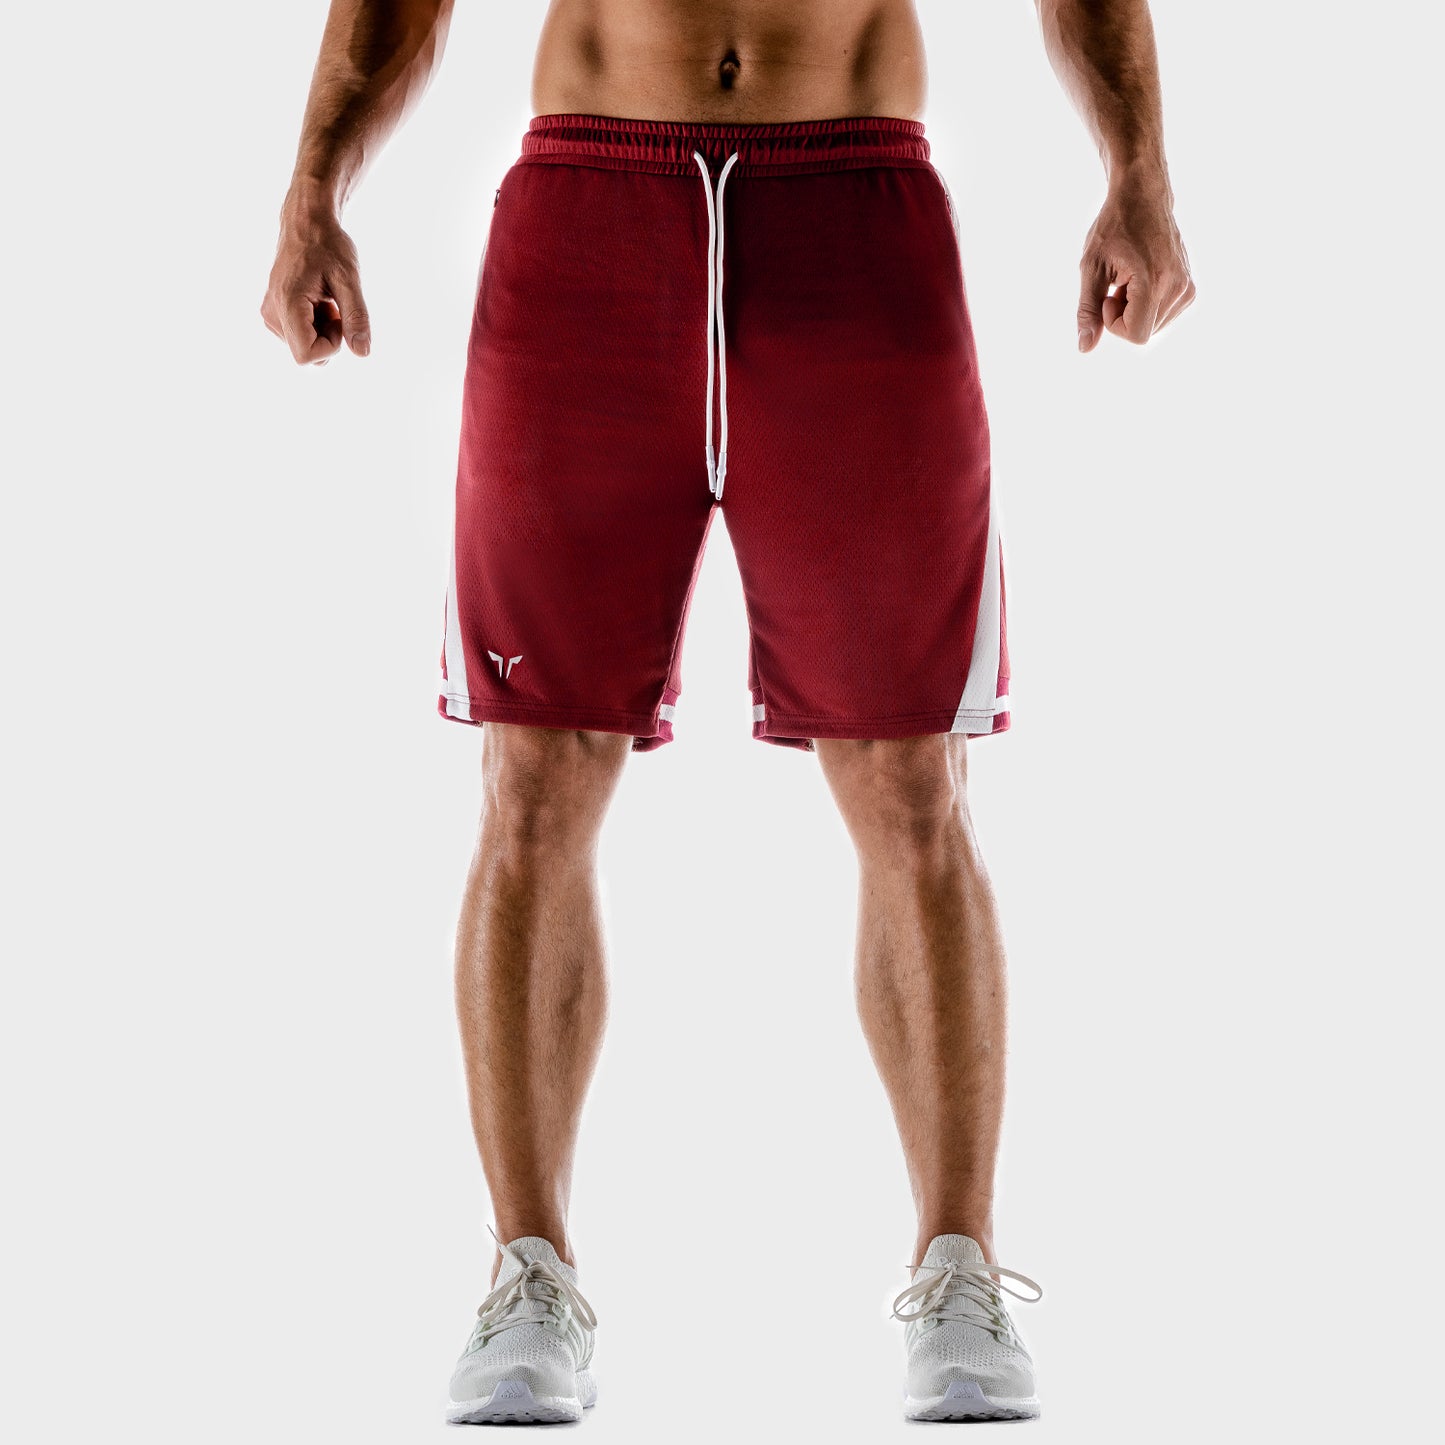 squatwolf-workout-short-for-men-hybrid-2-0-basketball-shorts-maroon-gym-wear